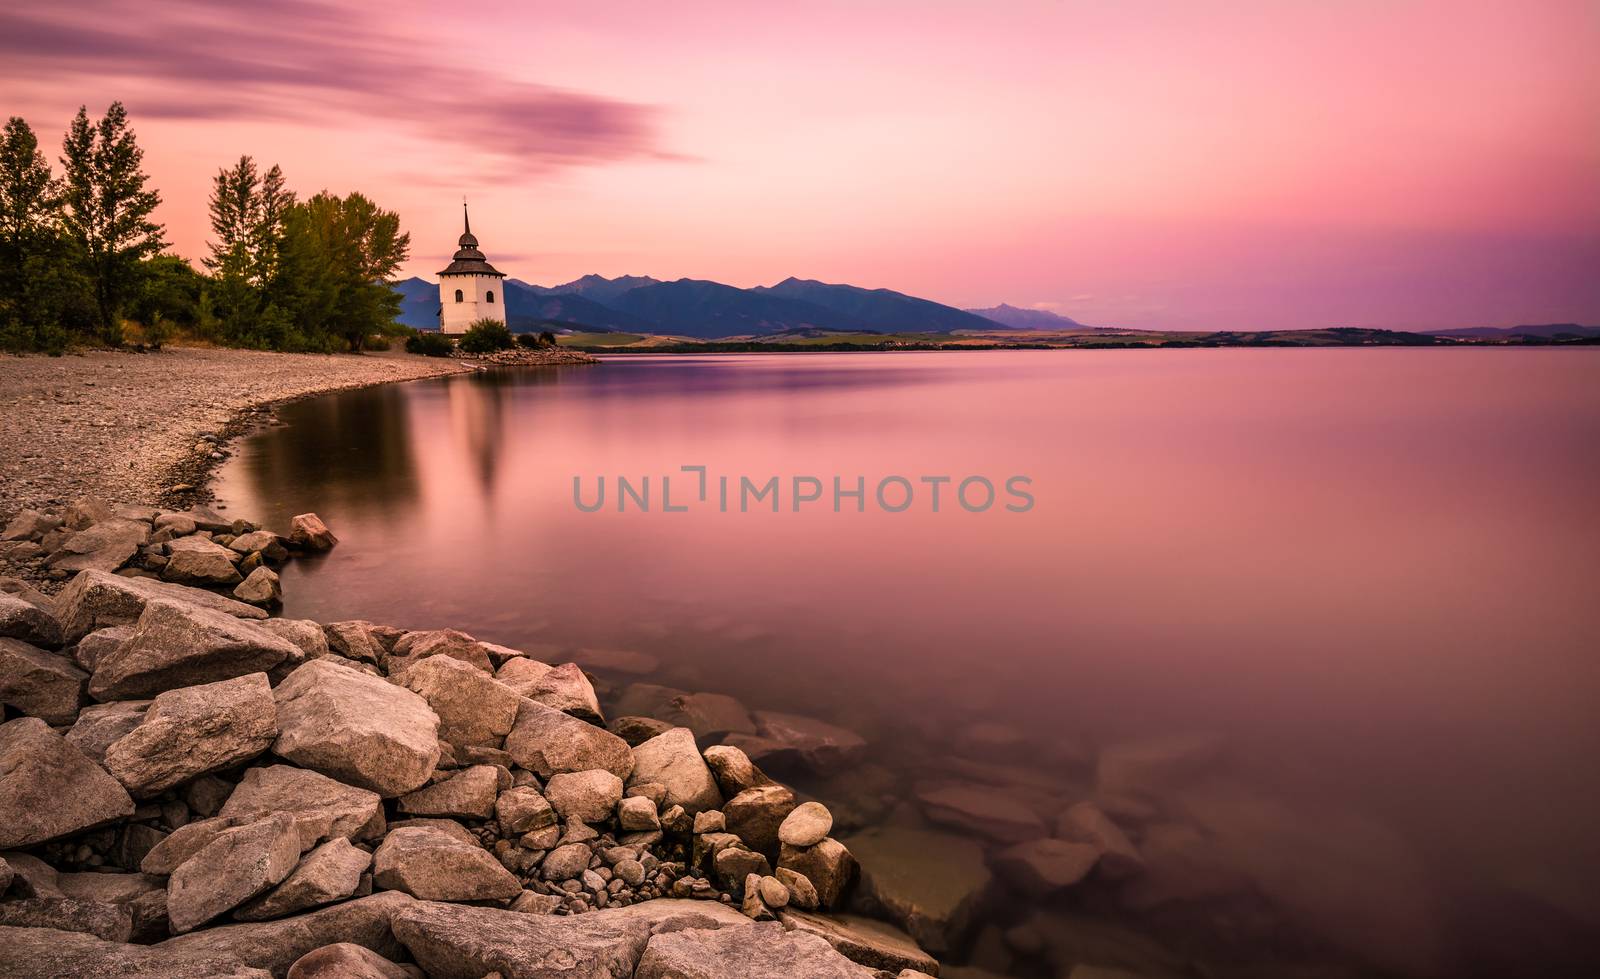 Sunset over a little church in Liptov, Slovakia by nickfox